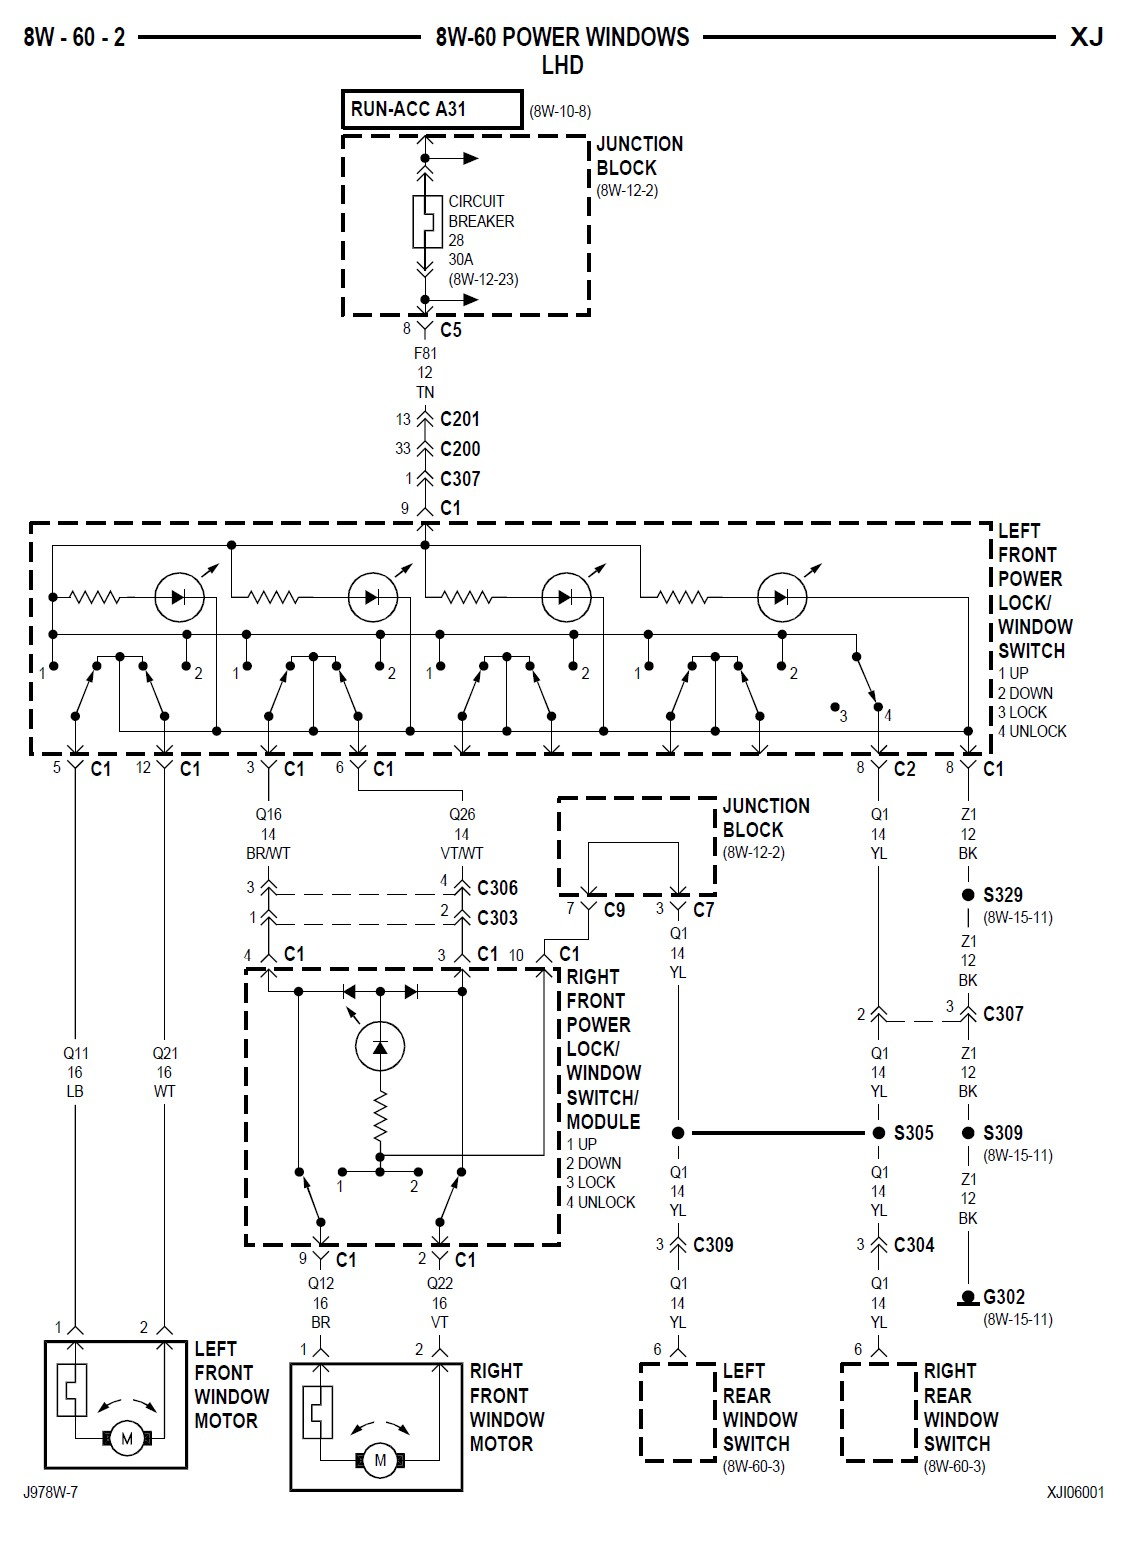 Power Window Wiring Diagram W163 from cimg8.ibsrv.net